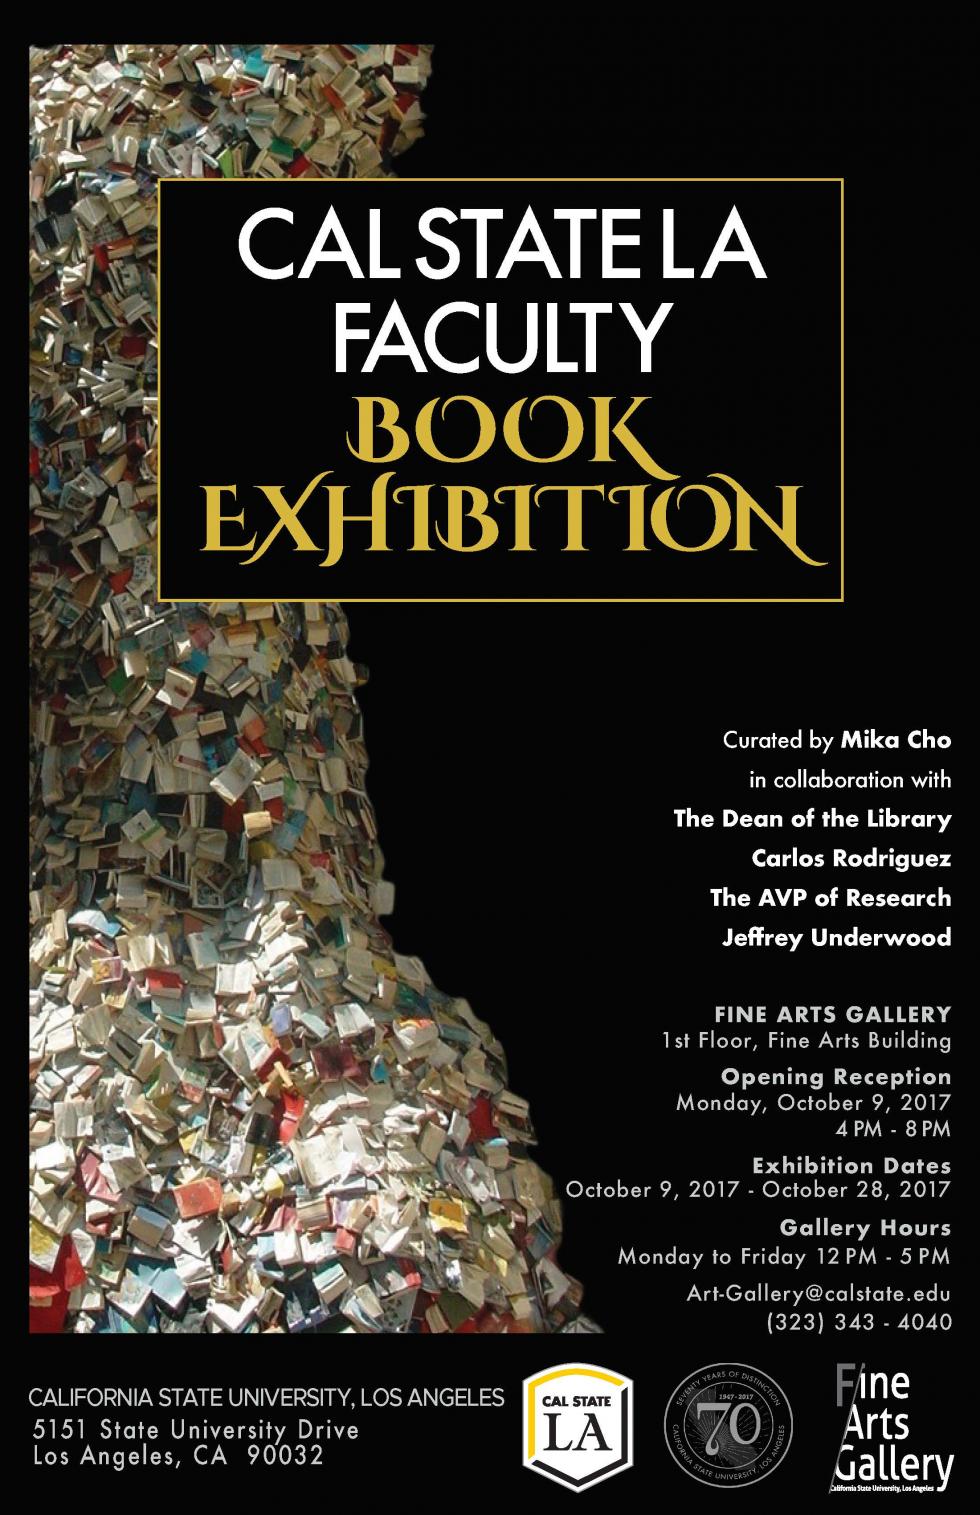 Faculty Book Exhibition